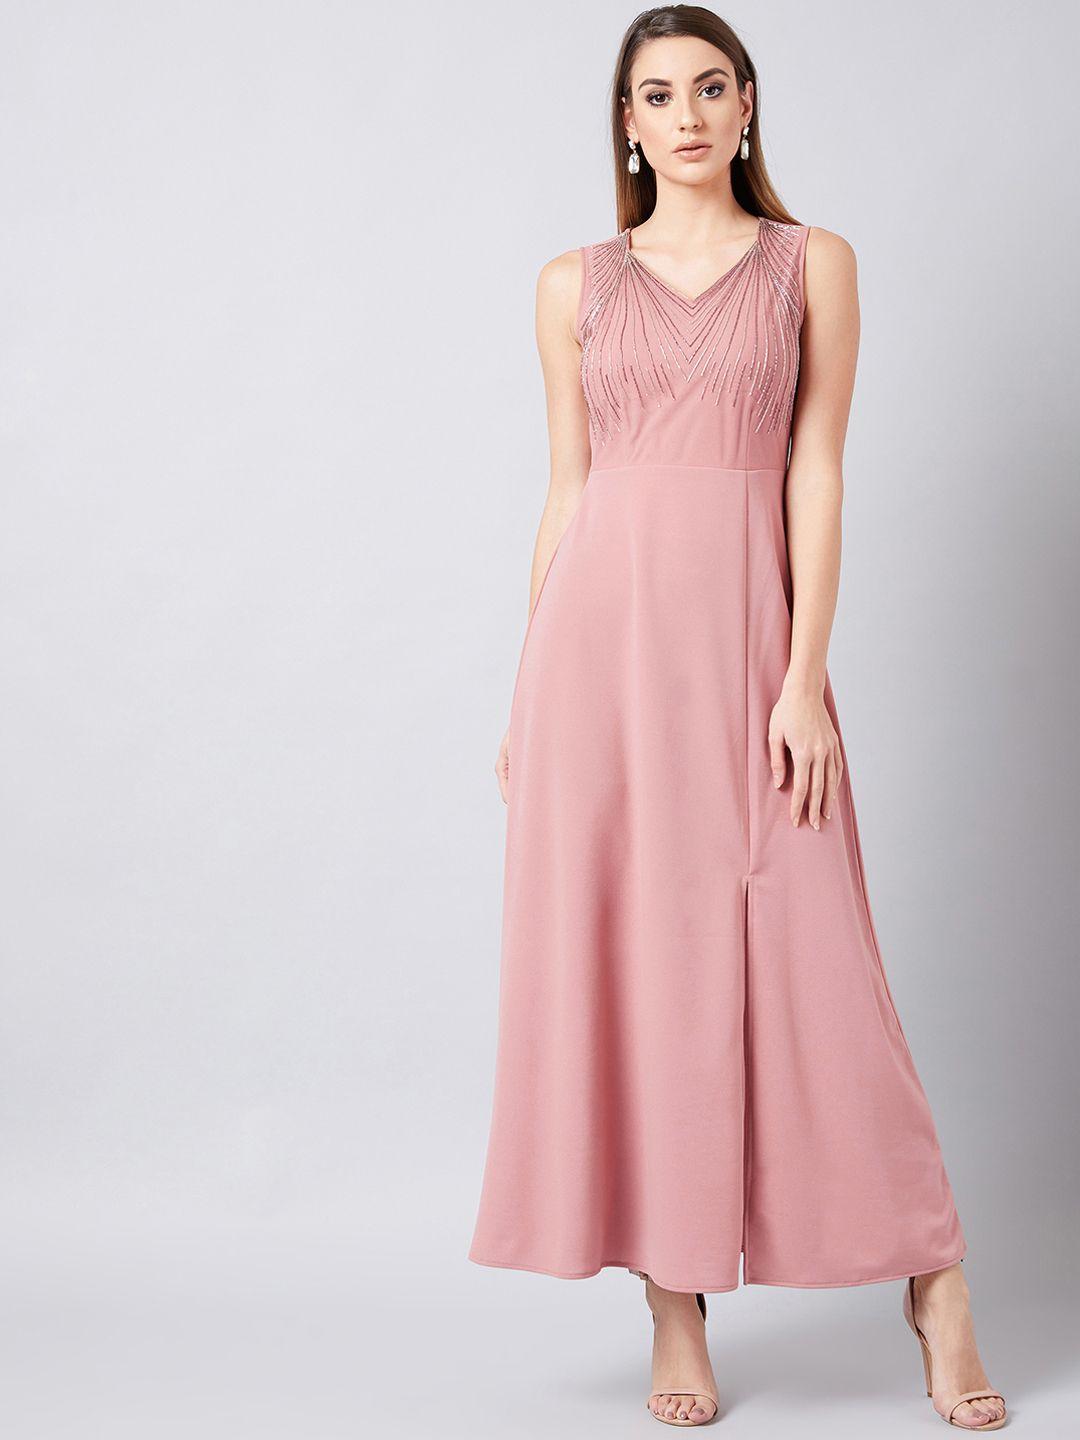 athena women embellished pink maxi dress